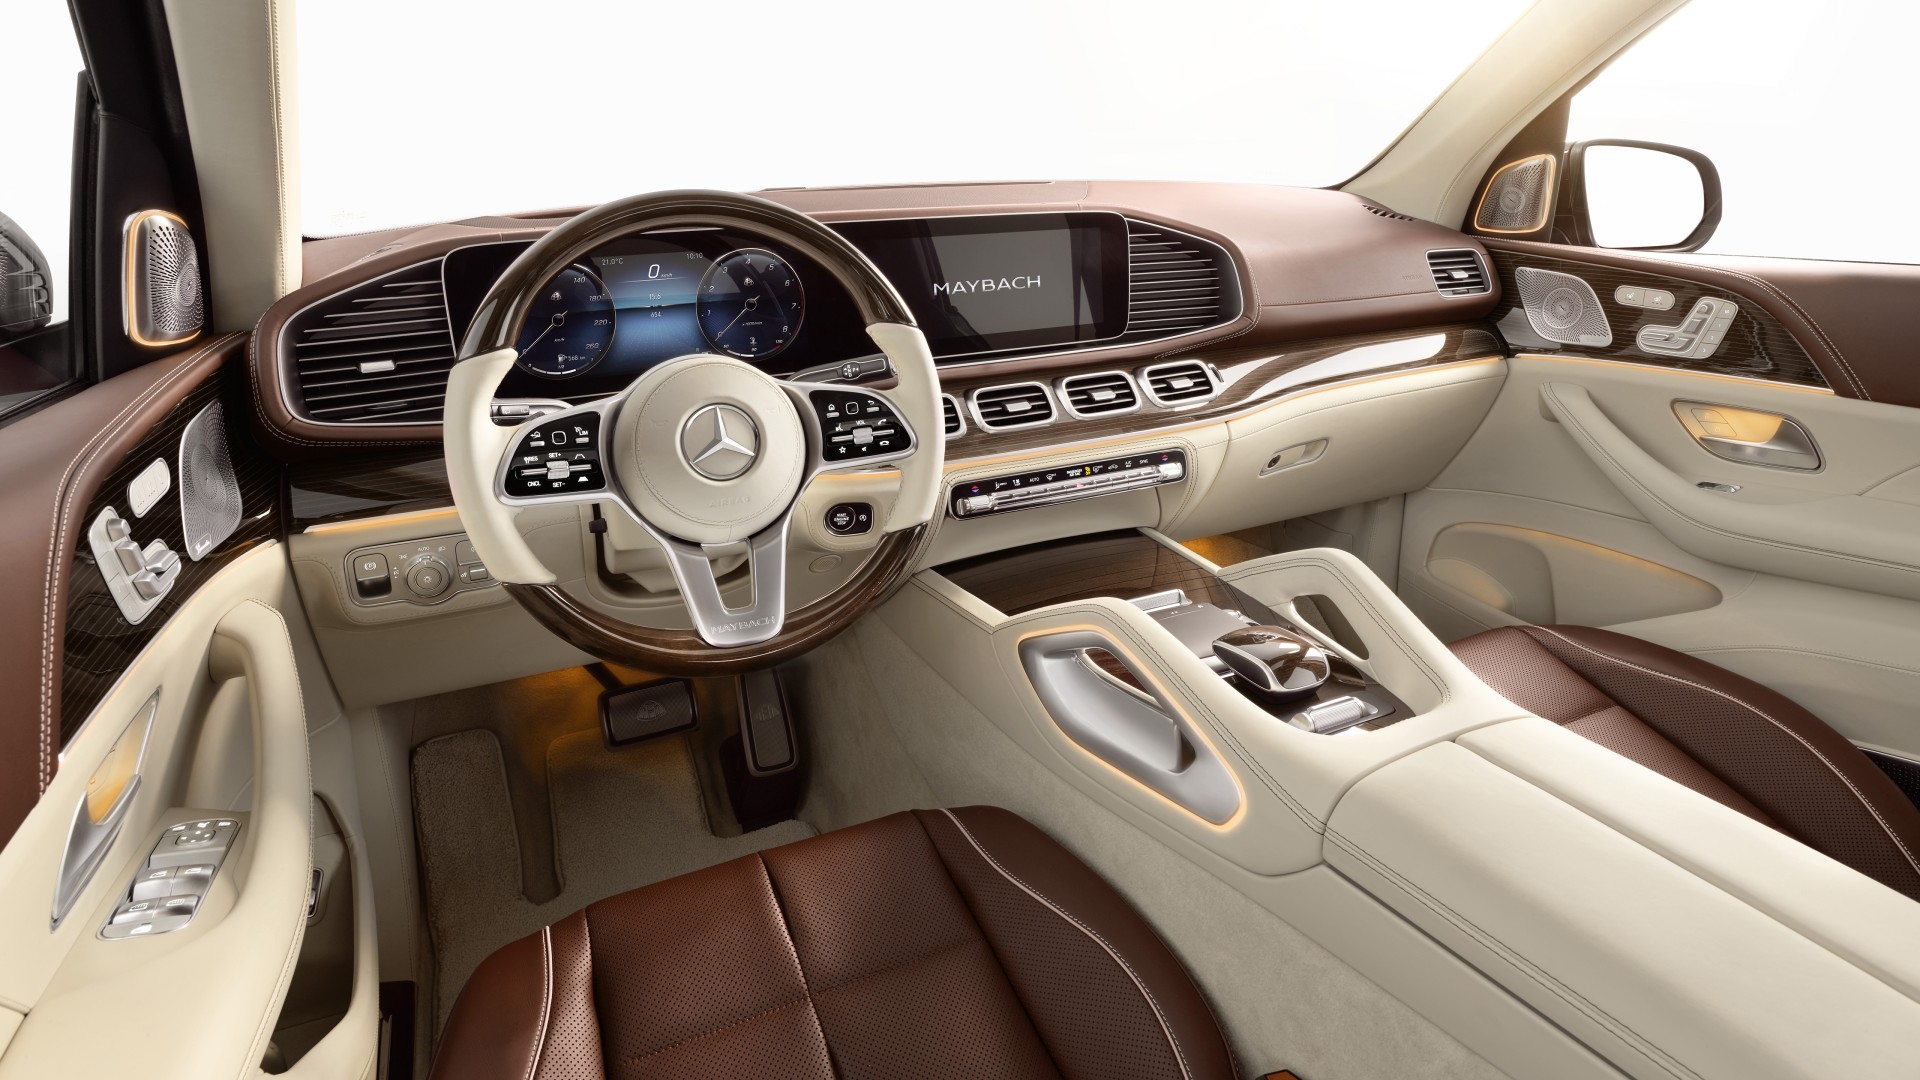 Mercedes-Maybach GLS 600 4MATIC 2020 4K Interior Wallpaper | HD Car